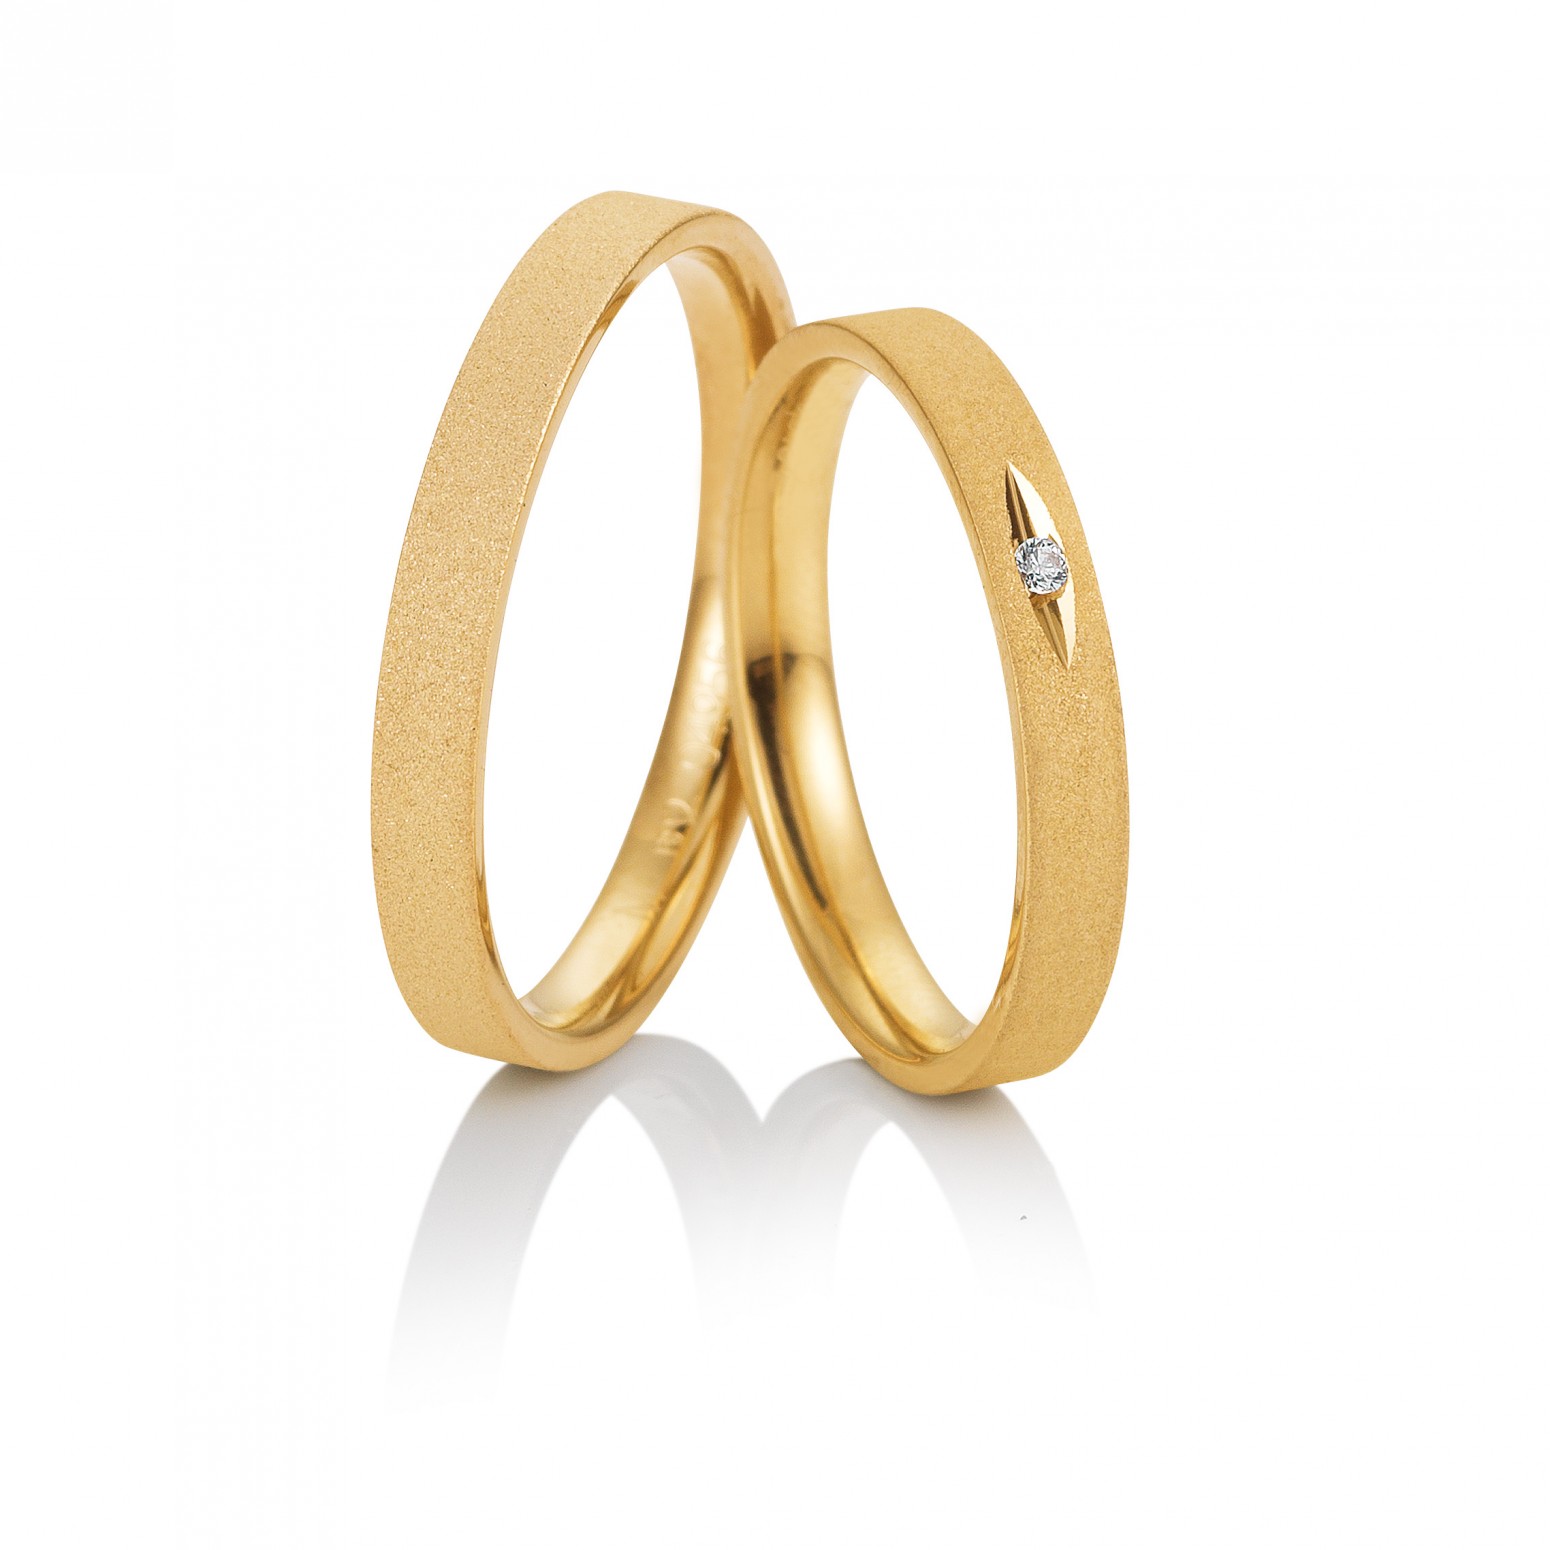 Saint Maurice wedding rings in yellow gold, K9, pair da3584 WEDDING RINGS Κοσμηματα - chrilia.gr